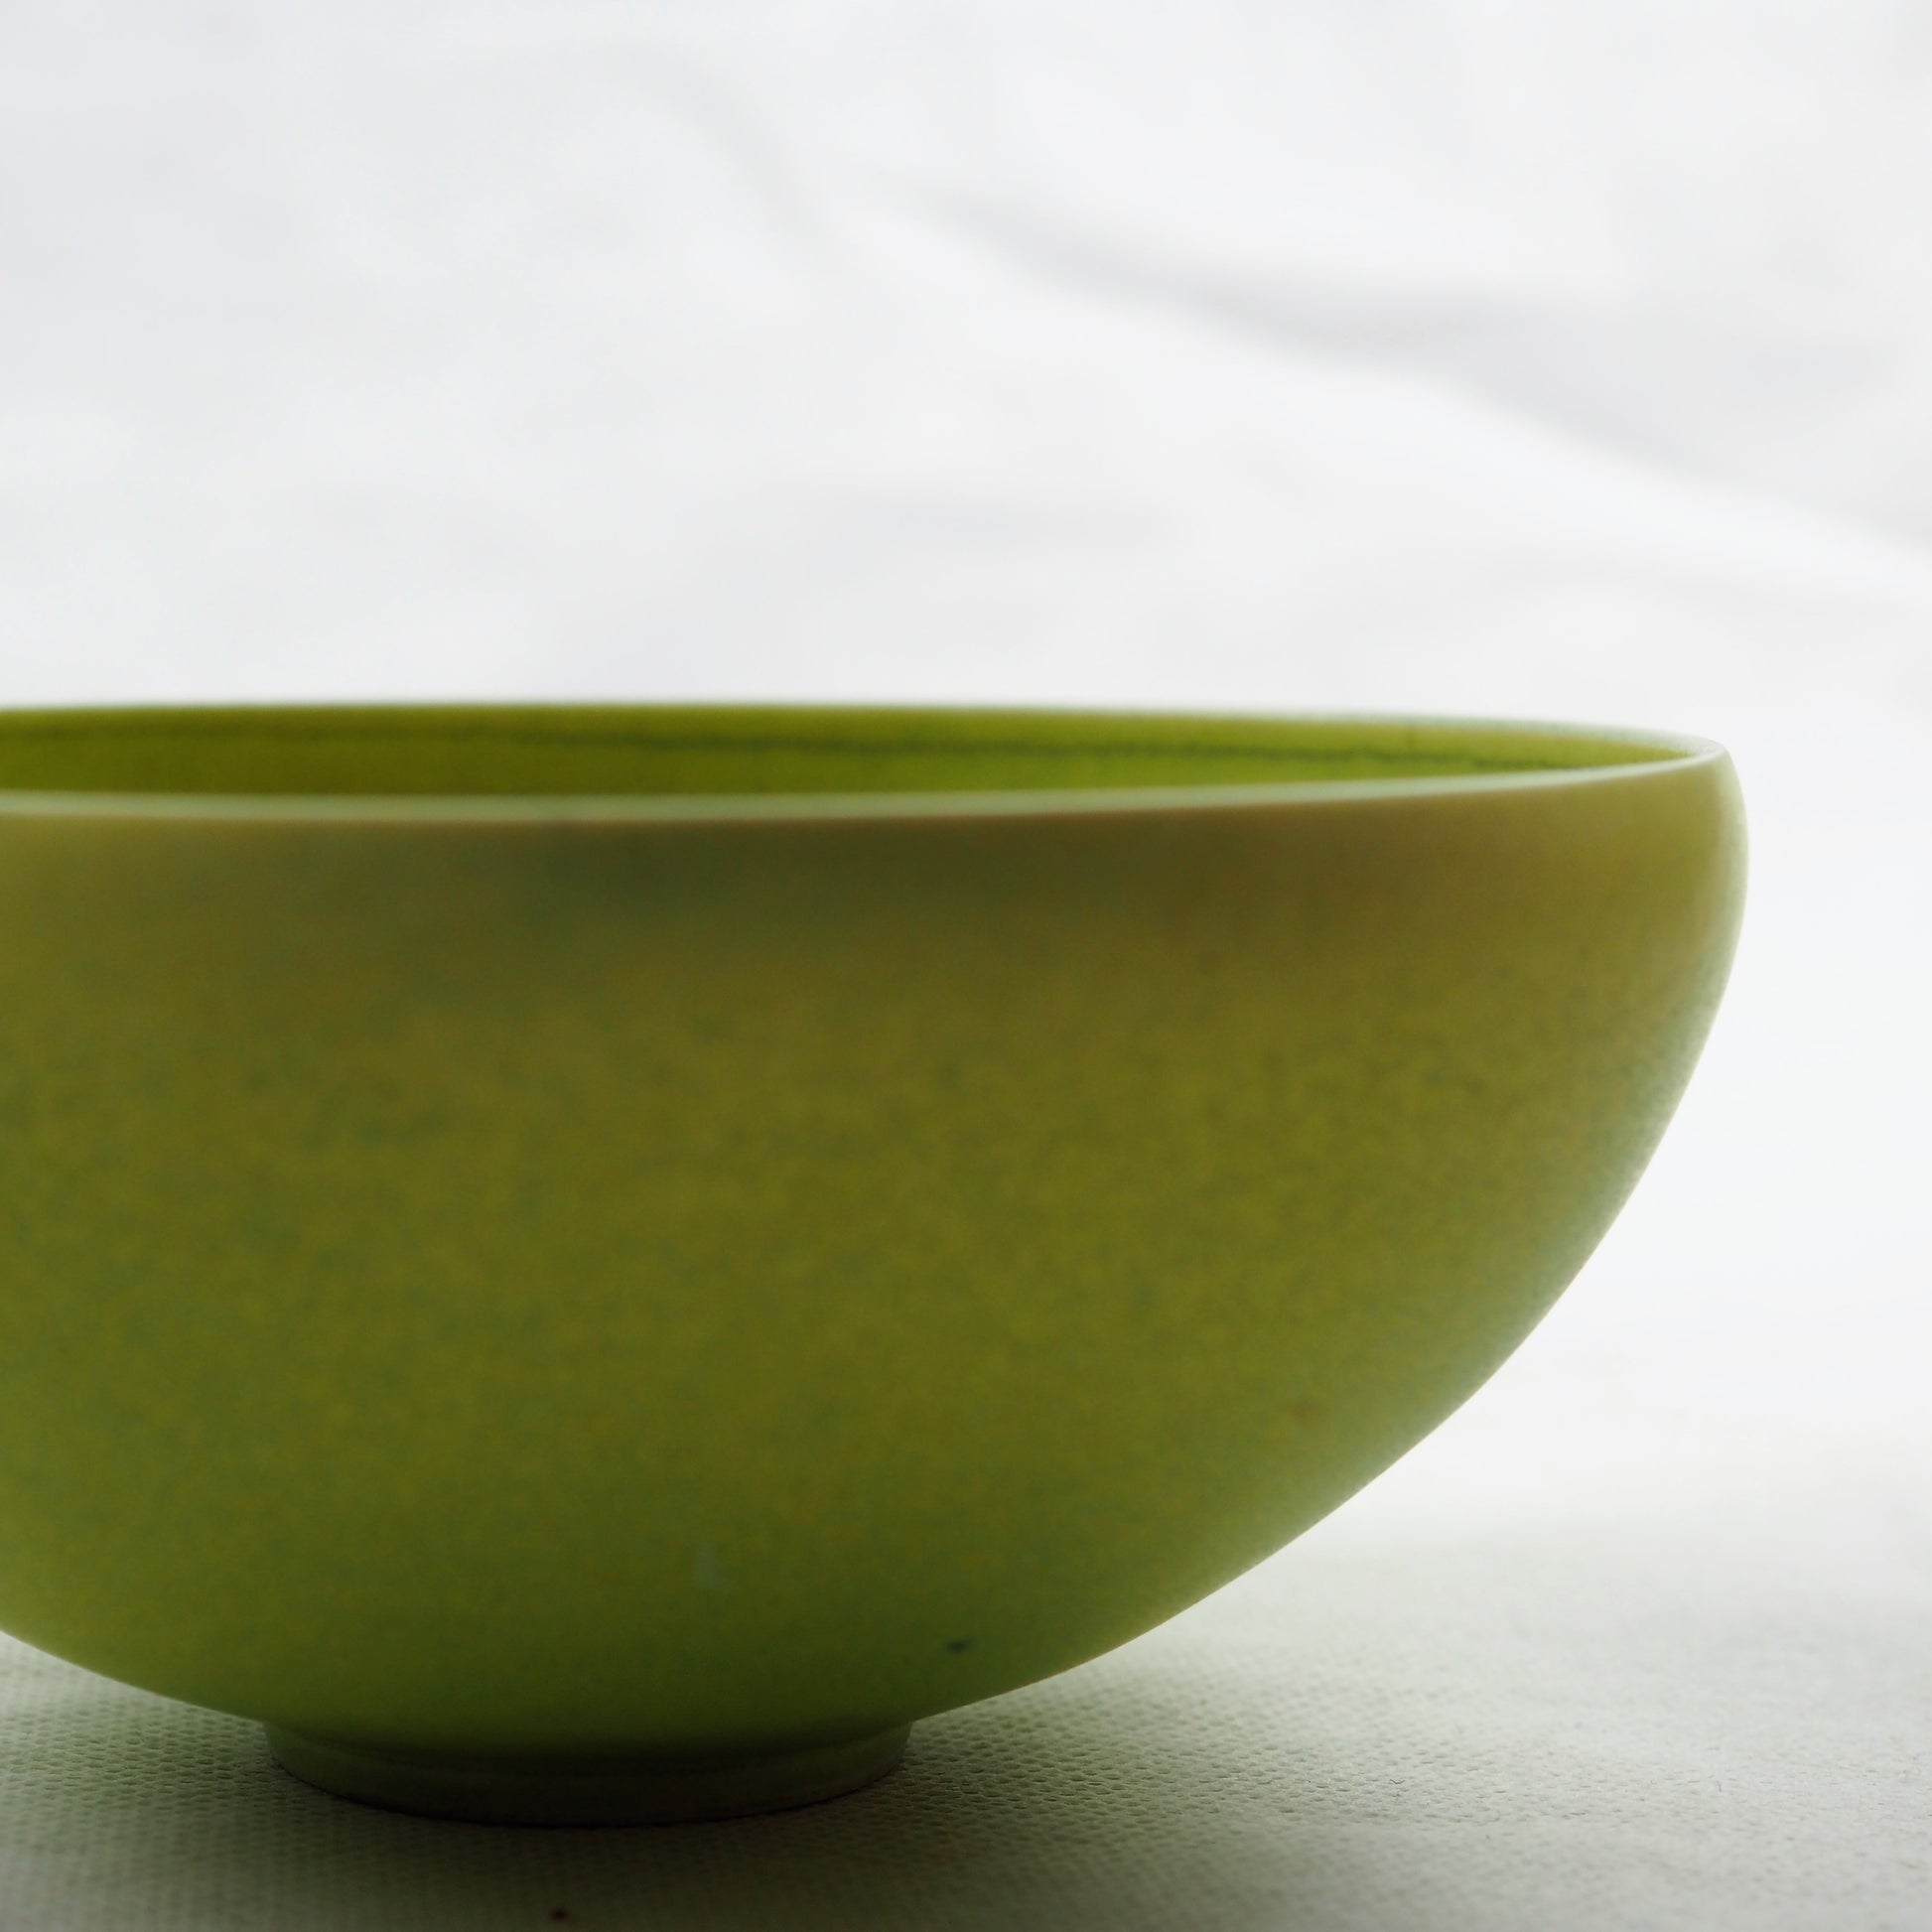 Spencer-Green, Alan – Green Porcelain Bowl | Alan Spencer-Green | Primavera Gallery